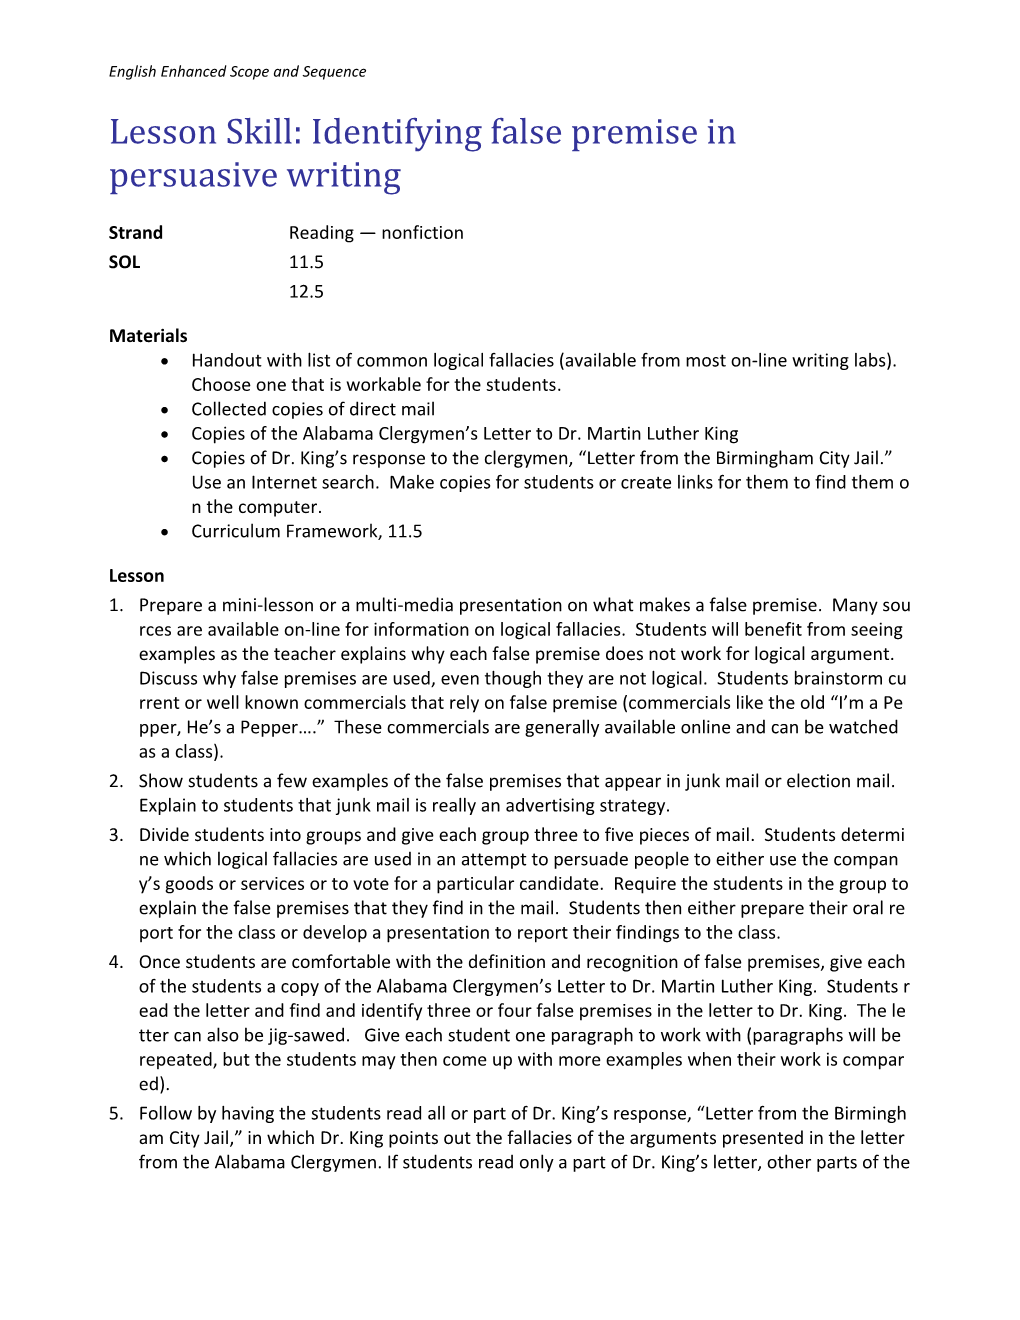 Lesson Skill: Identifying False Premise in Persuasive Writing